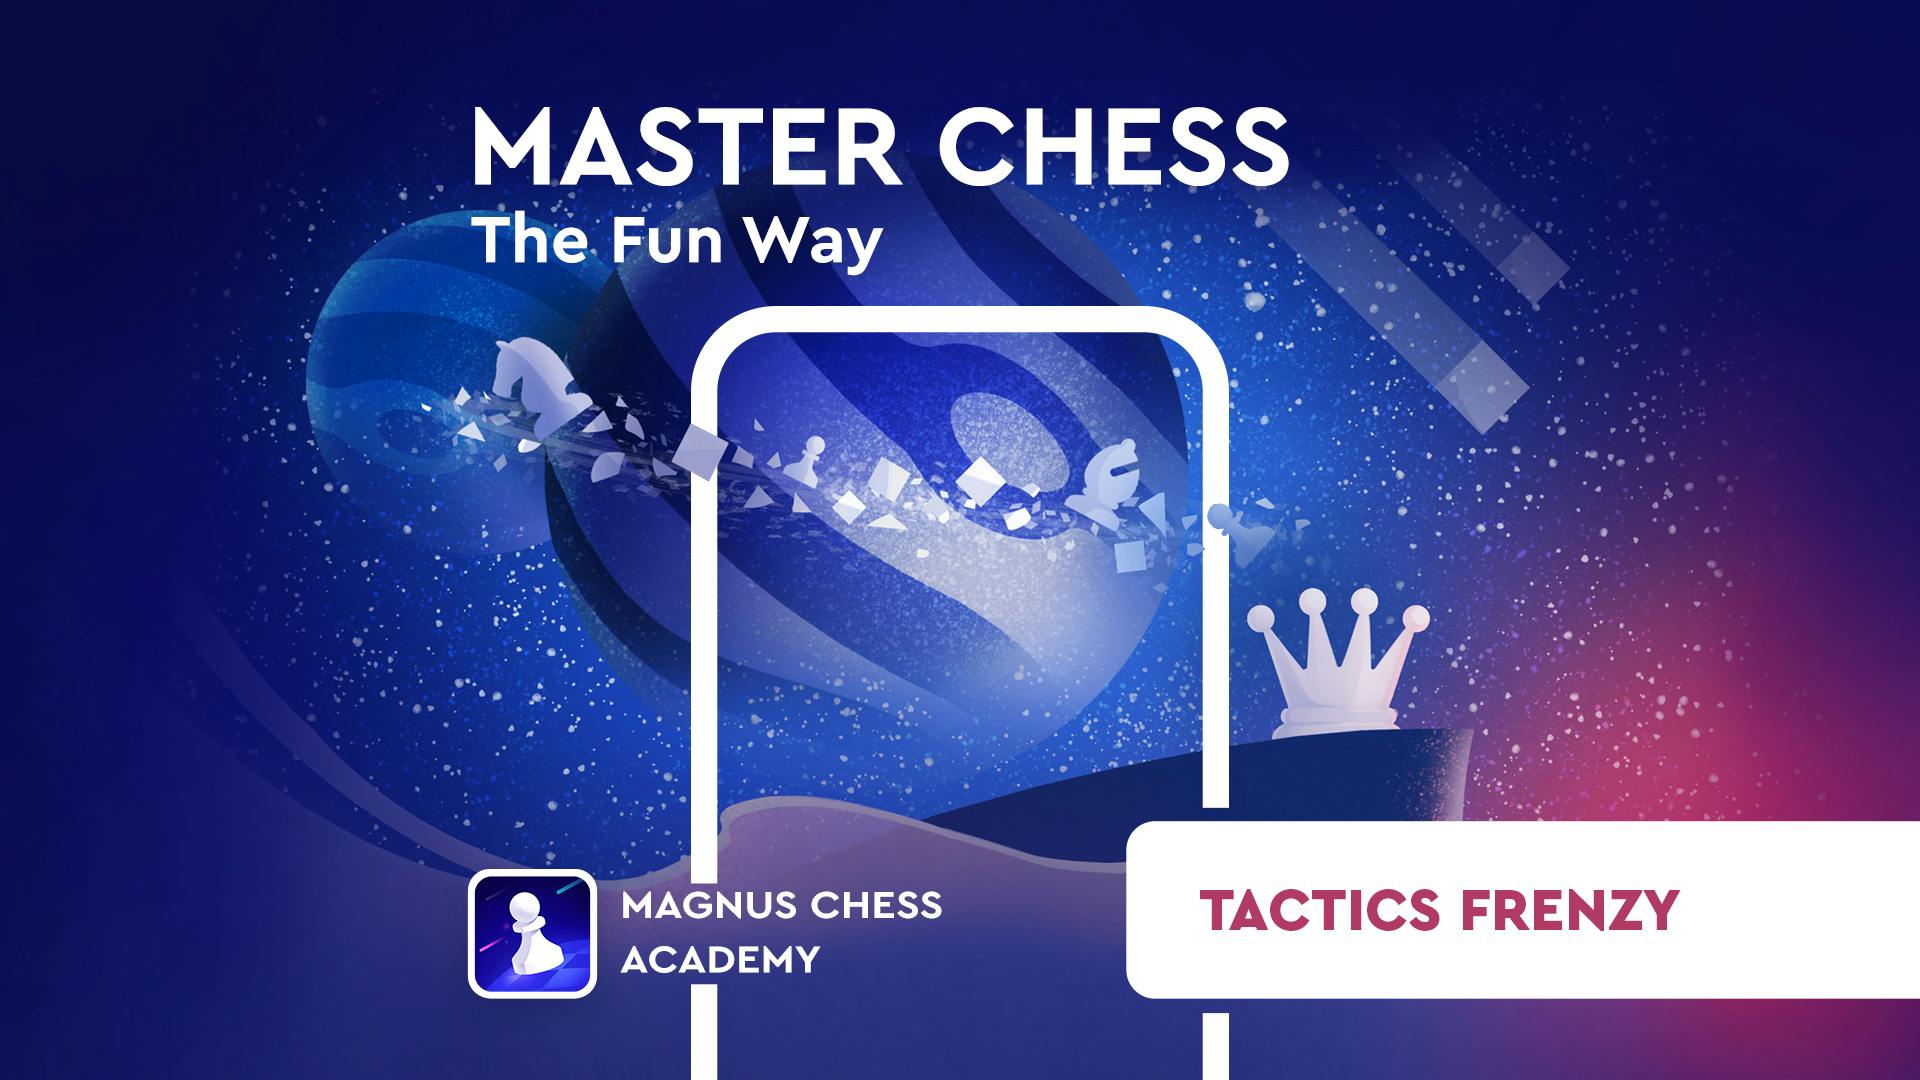 Magnus Chess Academy